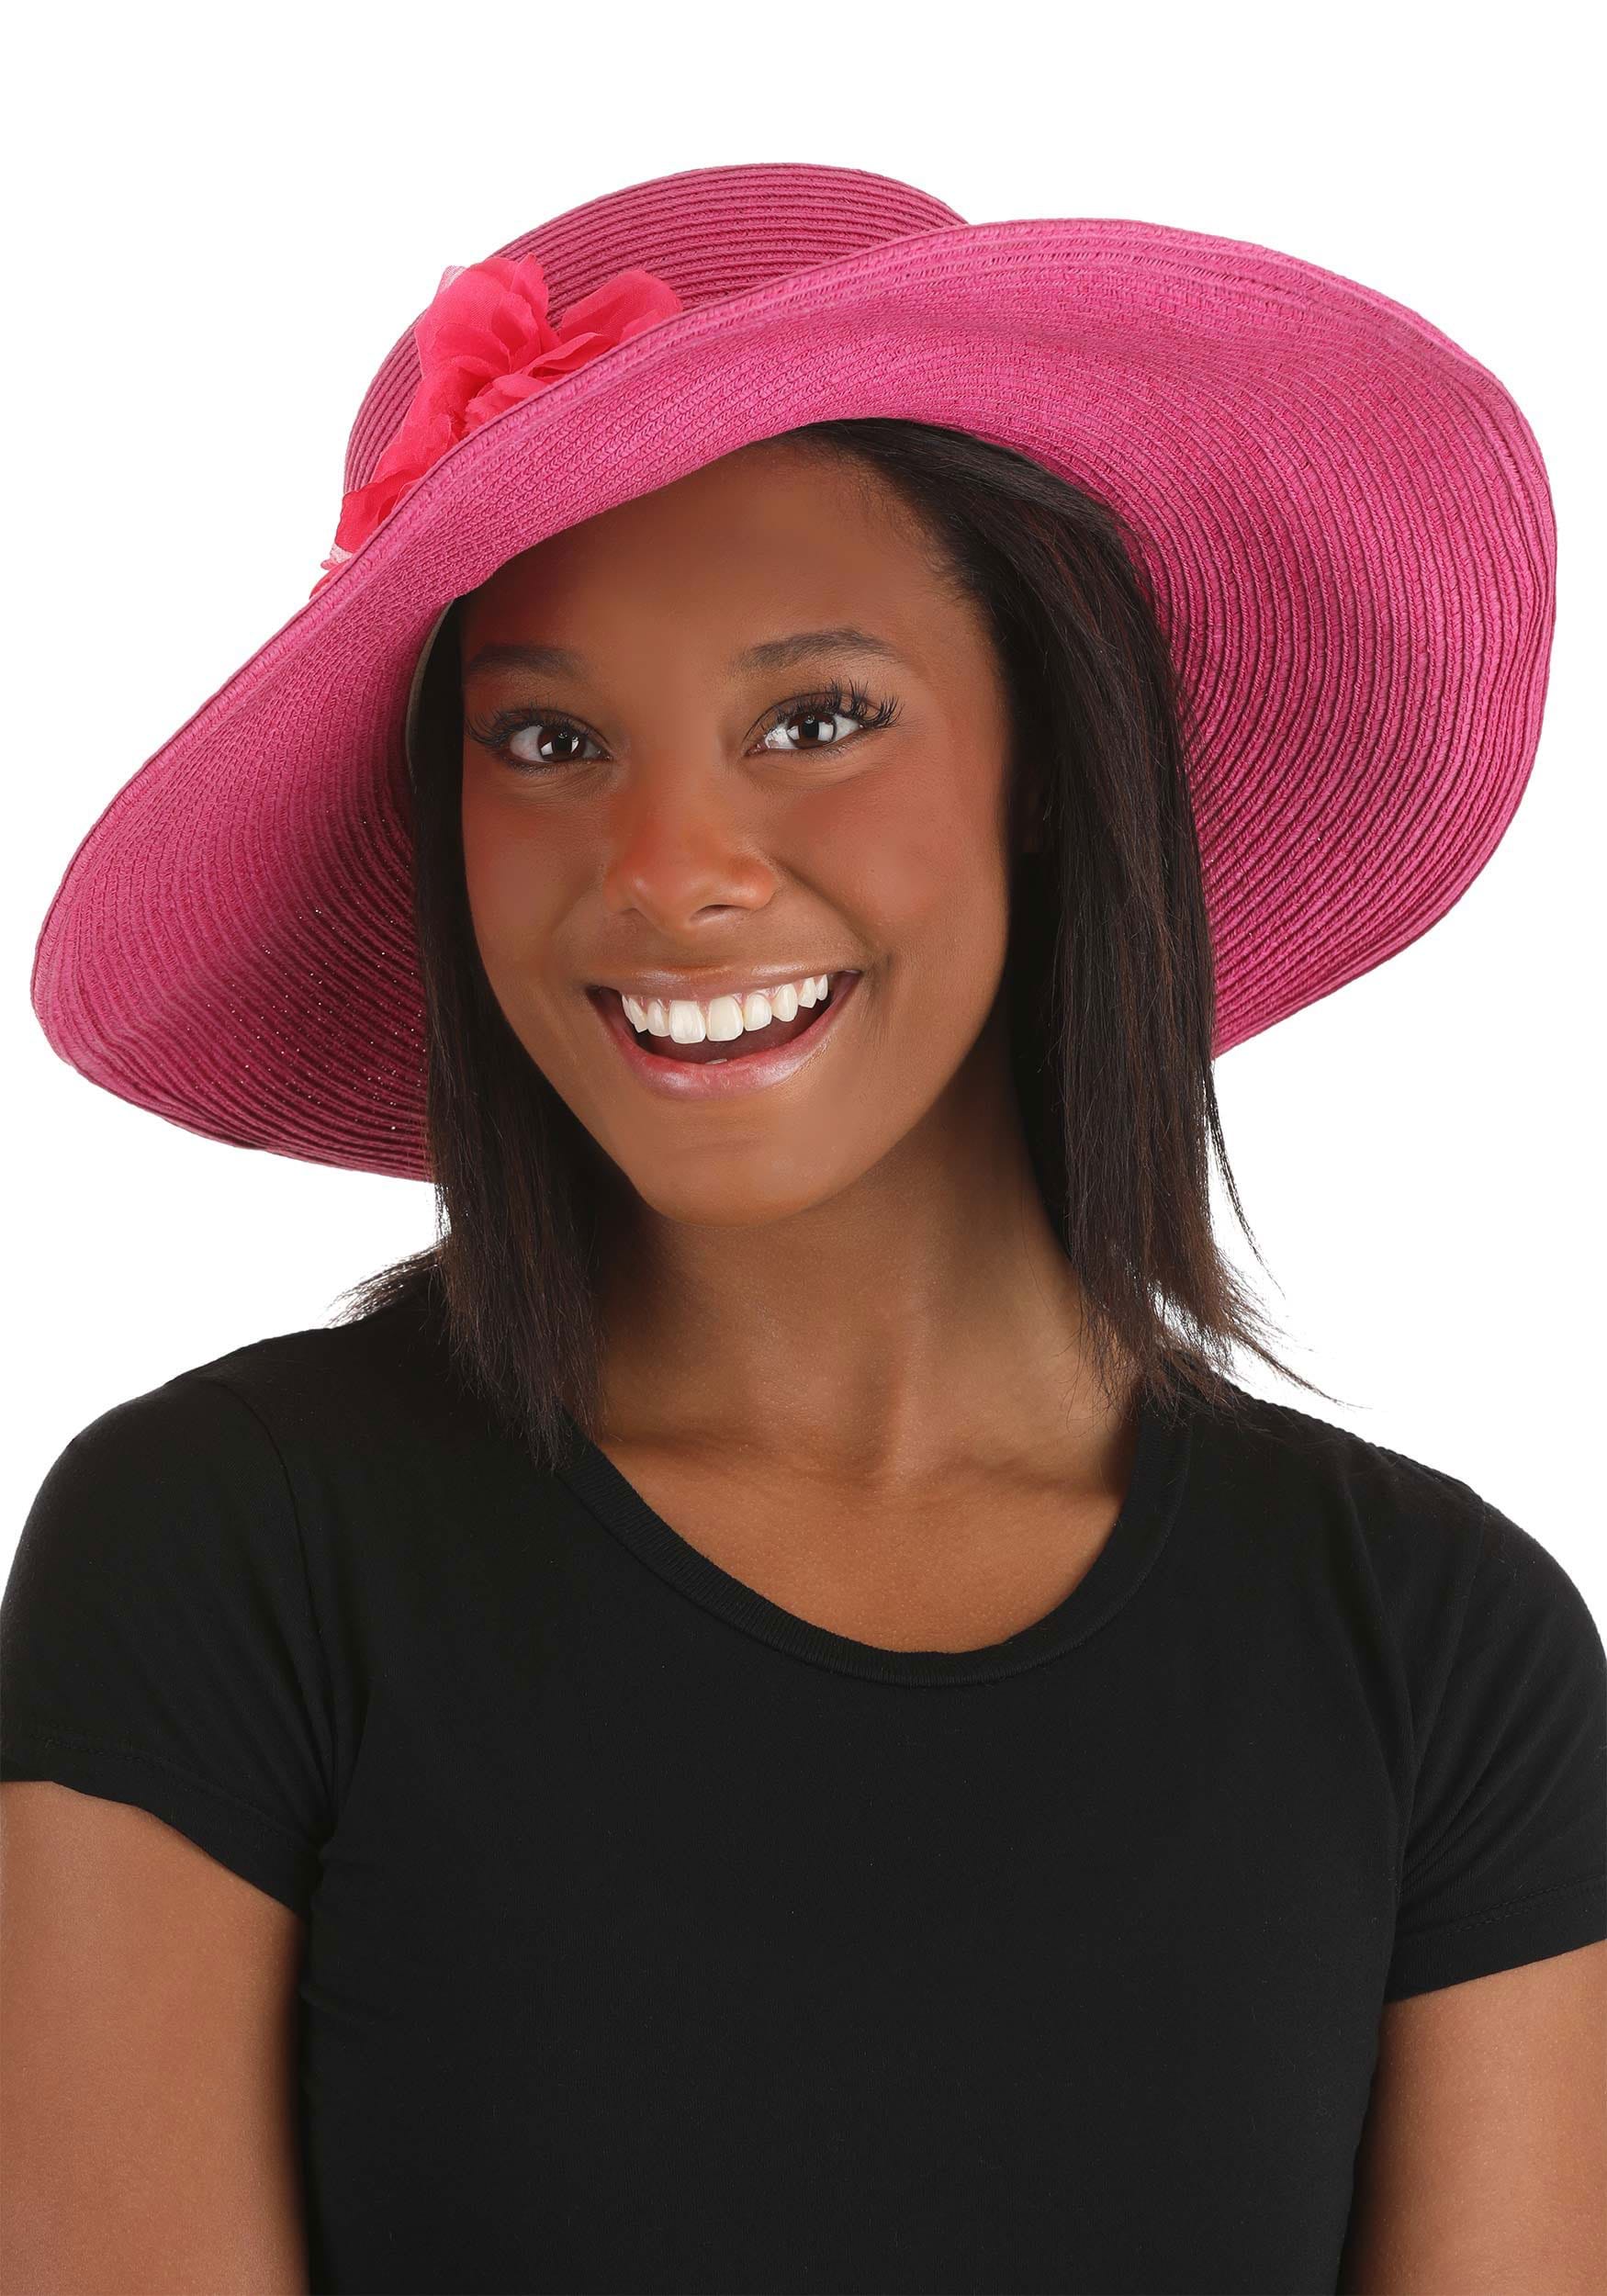 Pink Kentucky Derby Ladies Hat